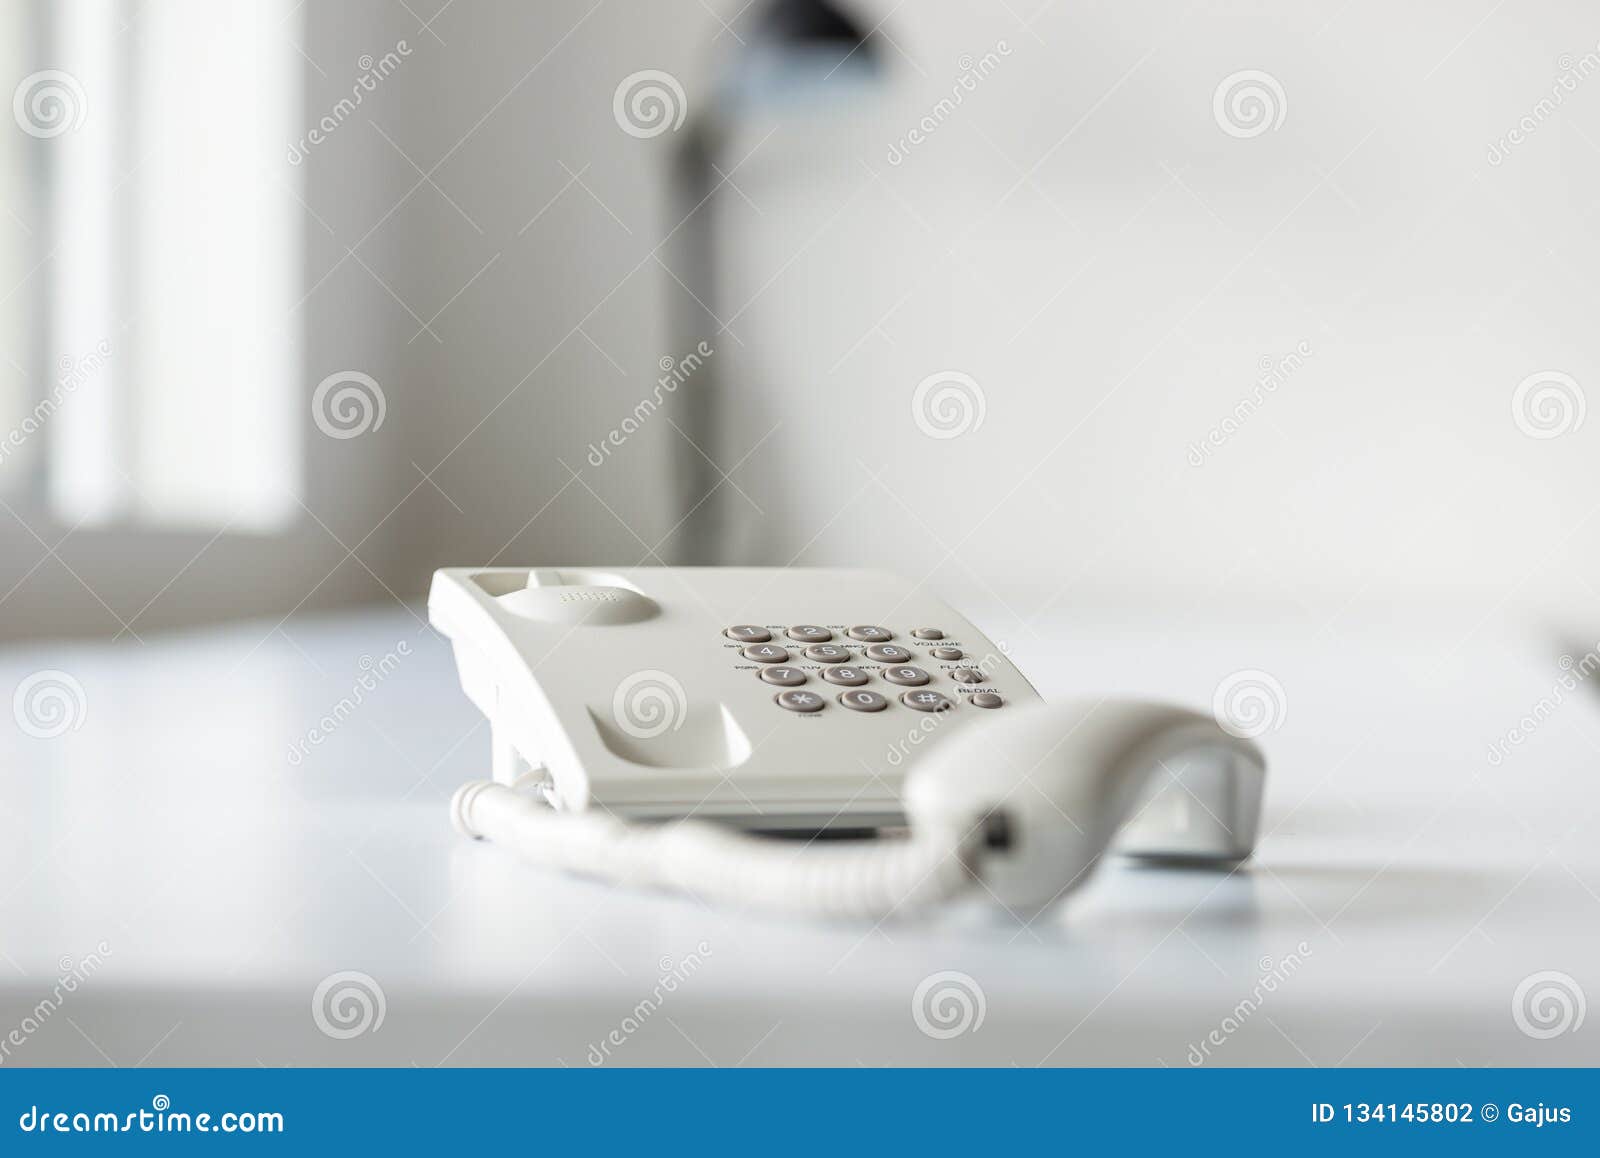 white landline telephone with handset off line